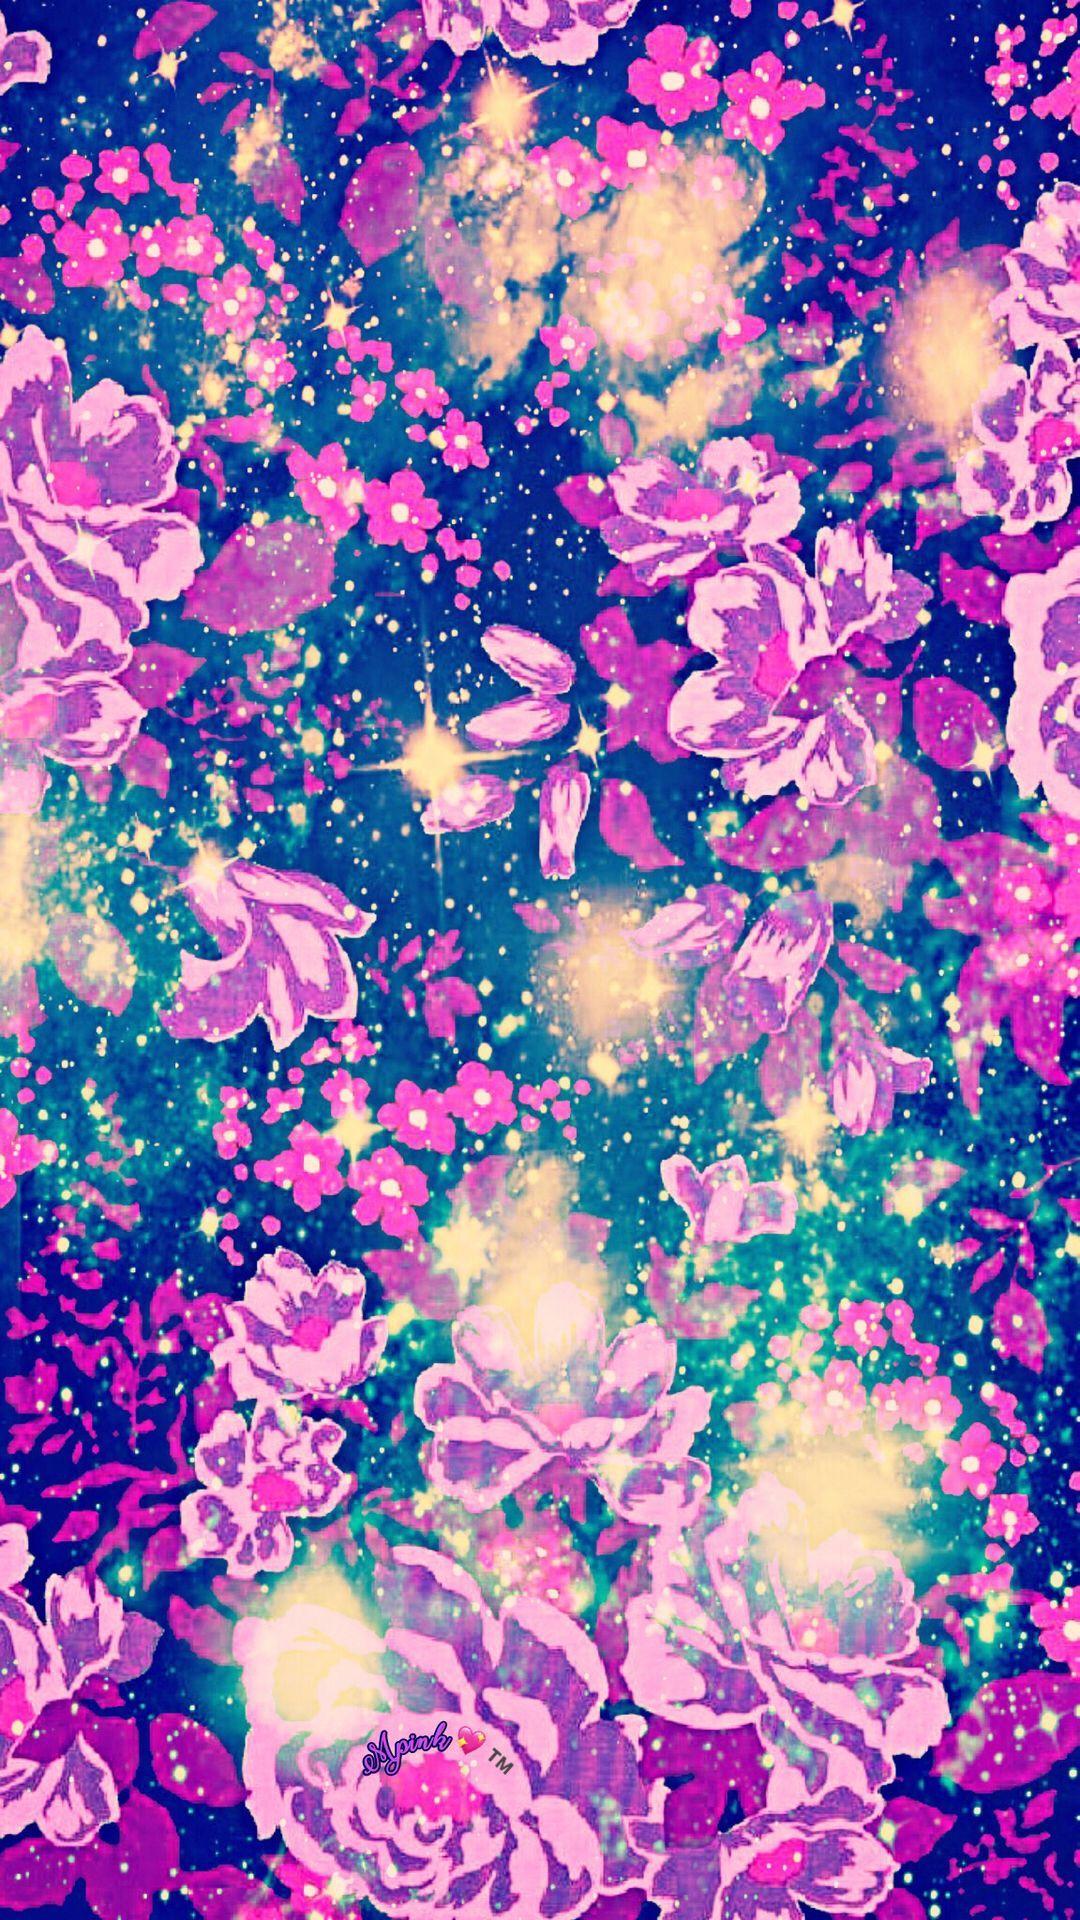 1080 x 1920 · jpeg - Pretty Glitter Wallpapers - Wallpaper Cave